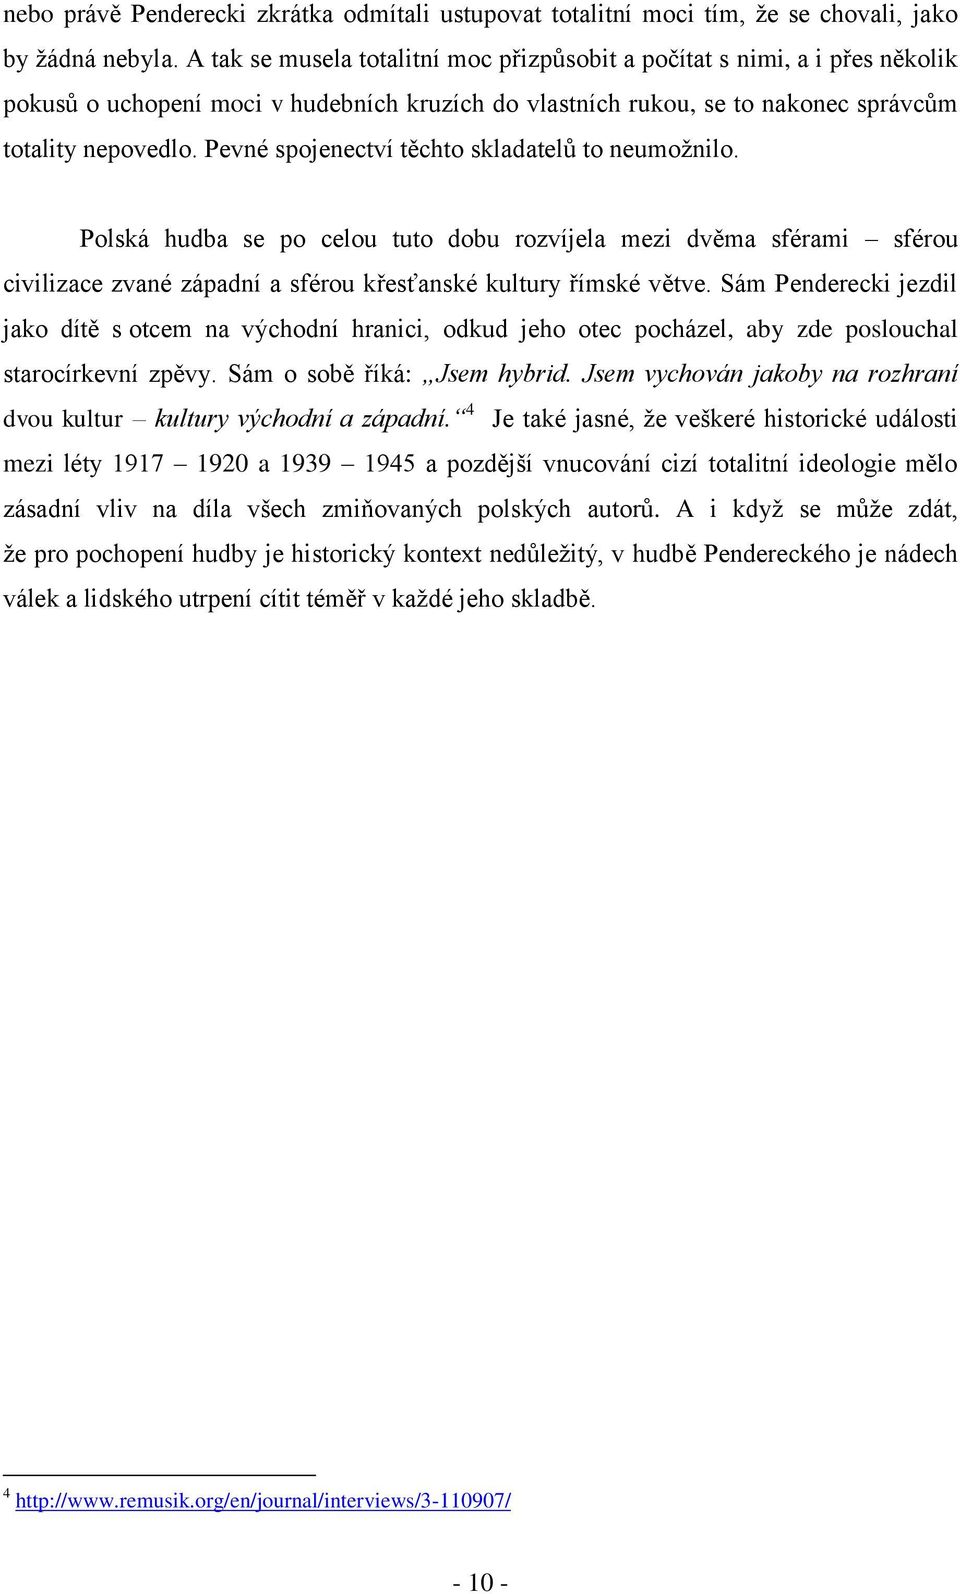 Středoškolská odborná činnost. Krzysztof Penderecki blázen nebo génius?  Krzysztof Penderecki a freak or a genius? - PDF Free Download